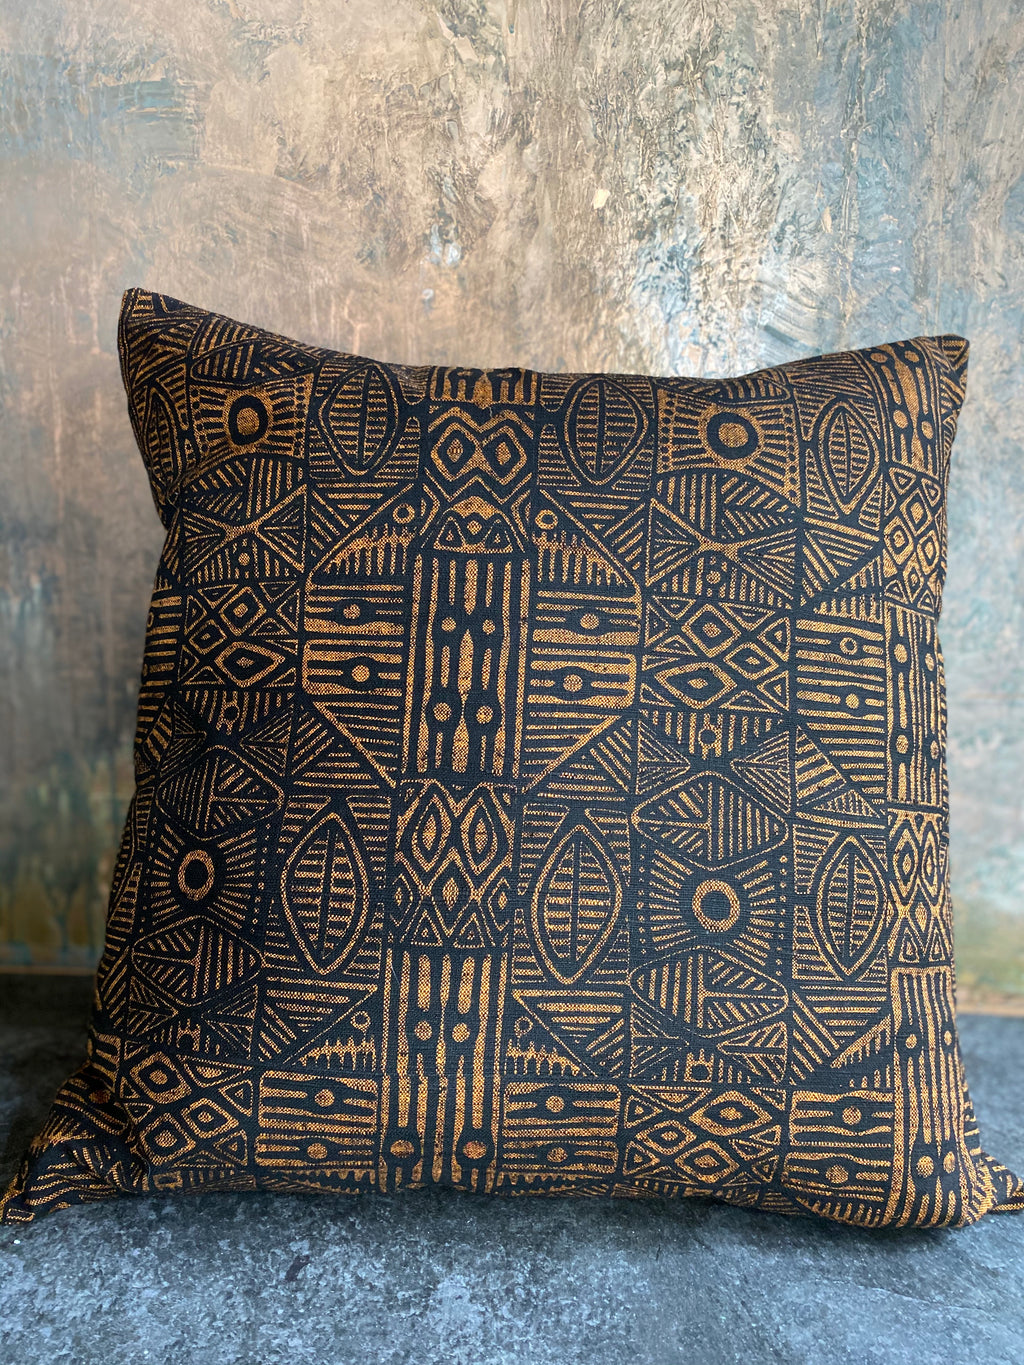 Ooroo Australia cushion featuring Stone Axe  by artist Danny Mankara - c1978,Tiwi Designs